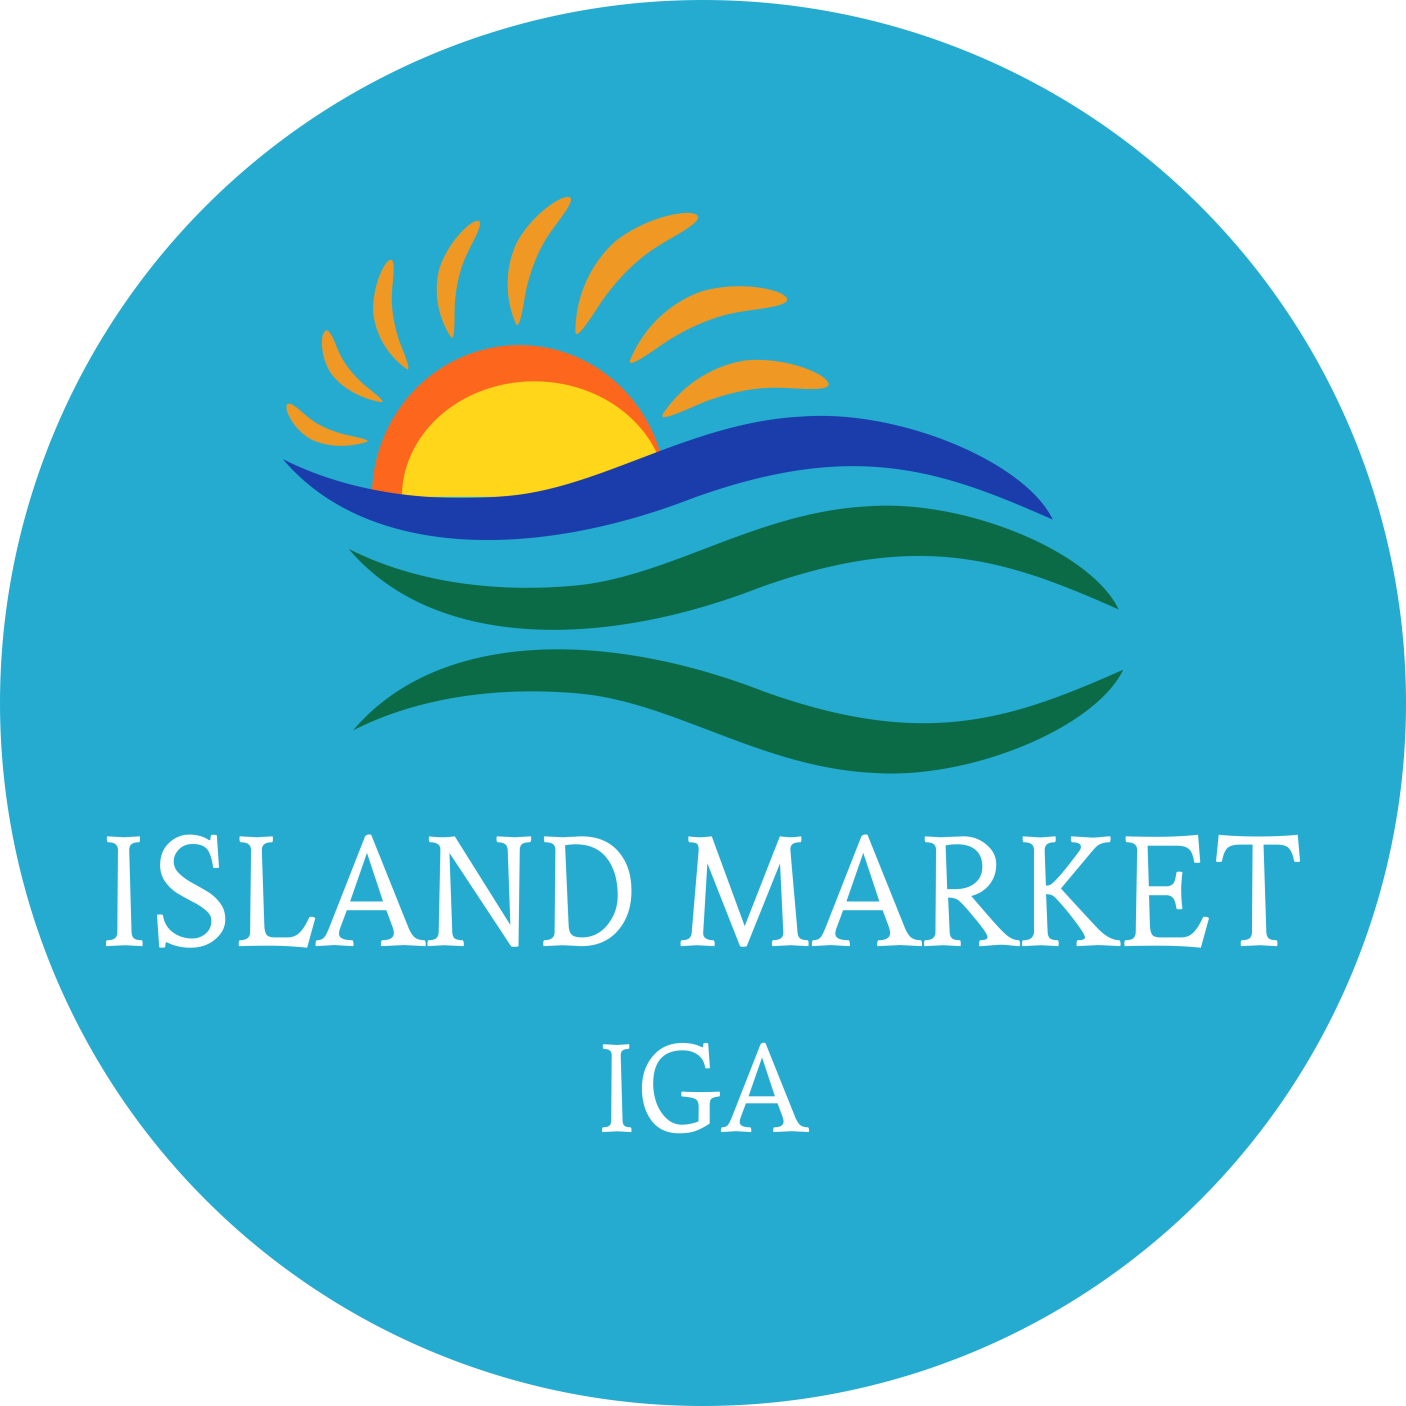 Island Market IGA